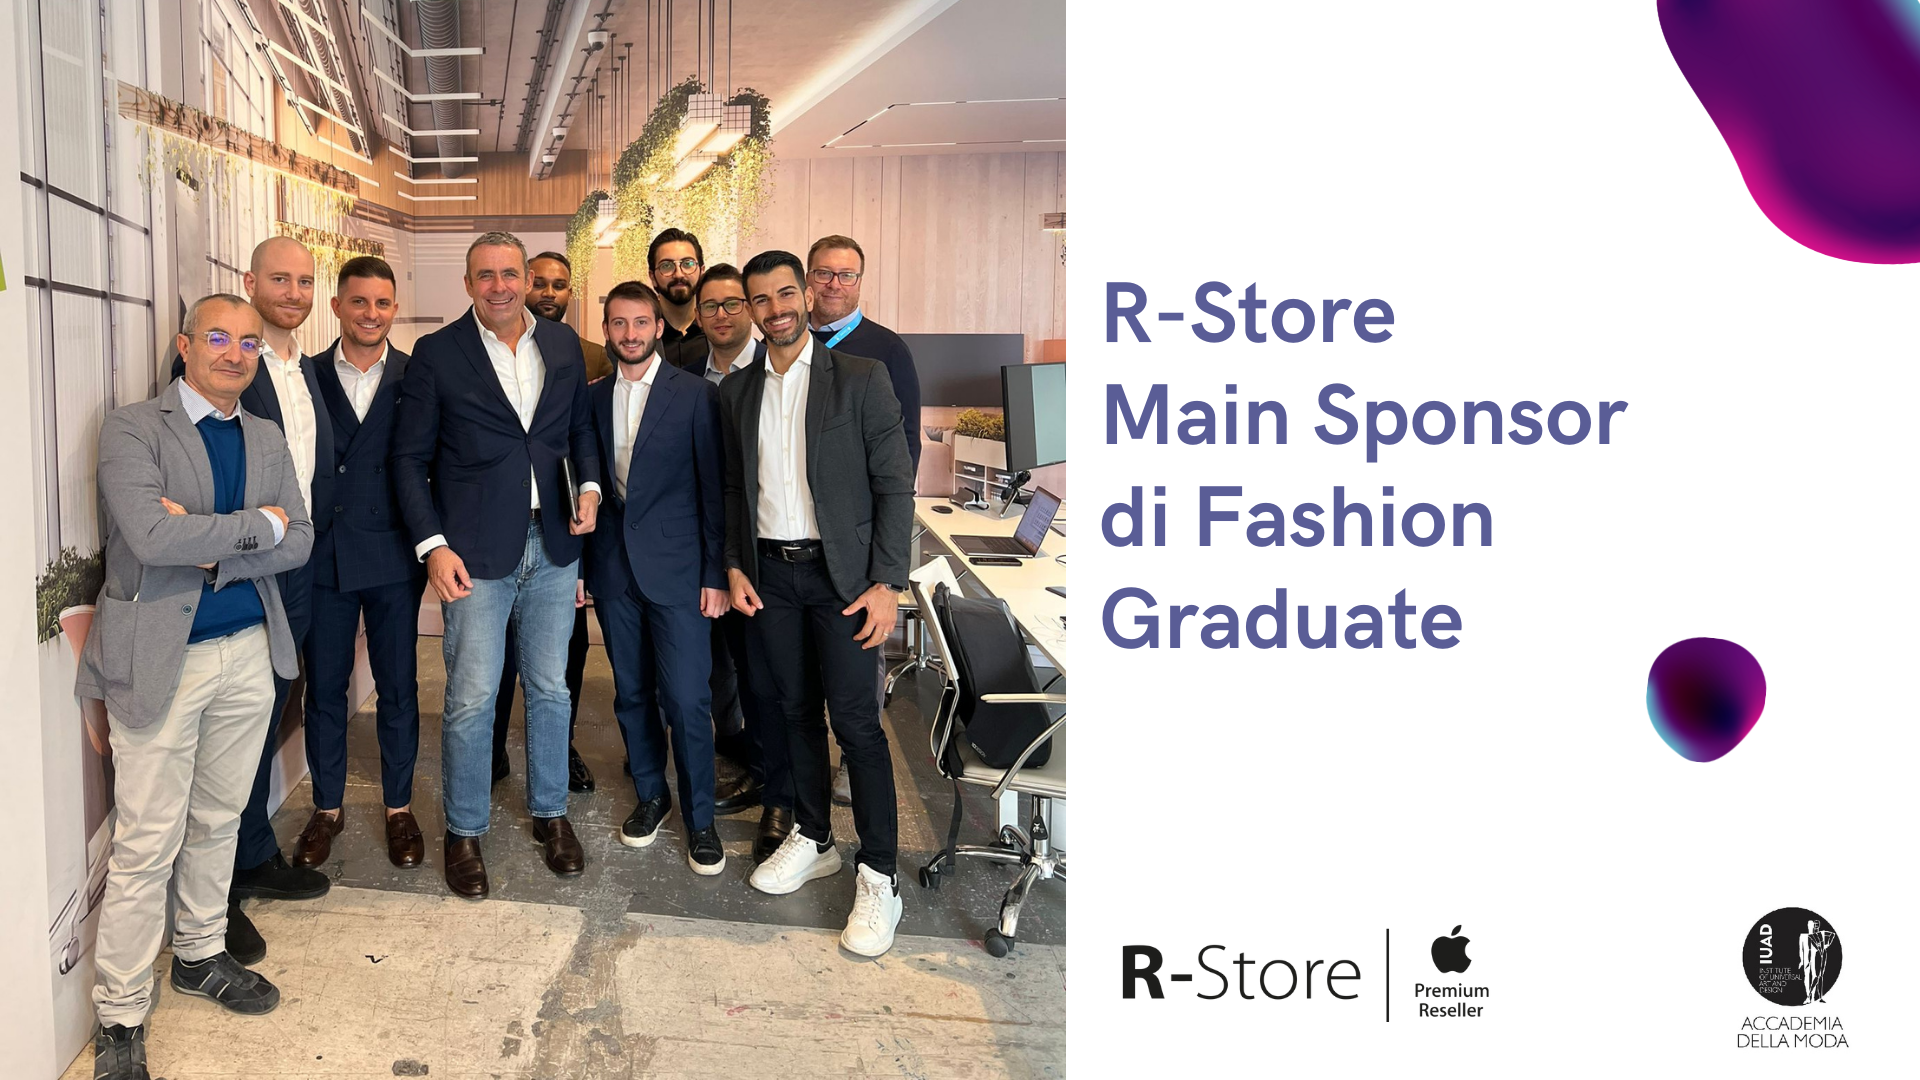 R-Store Main Sponsor di Fashion Graduate